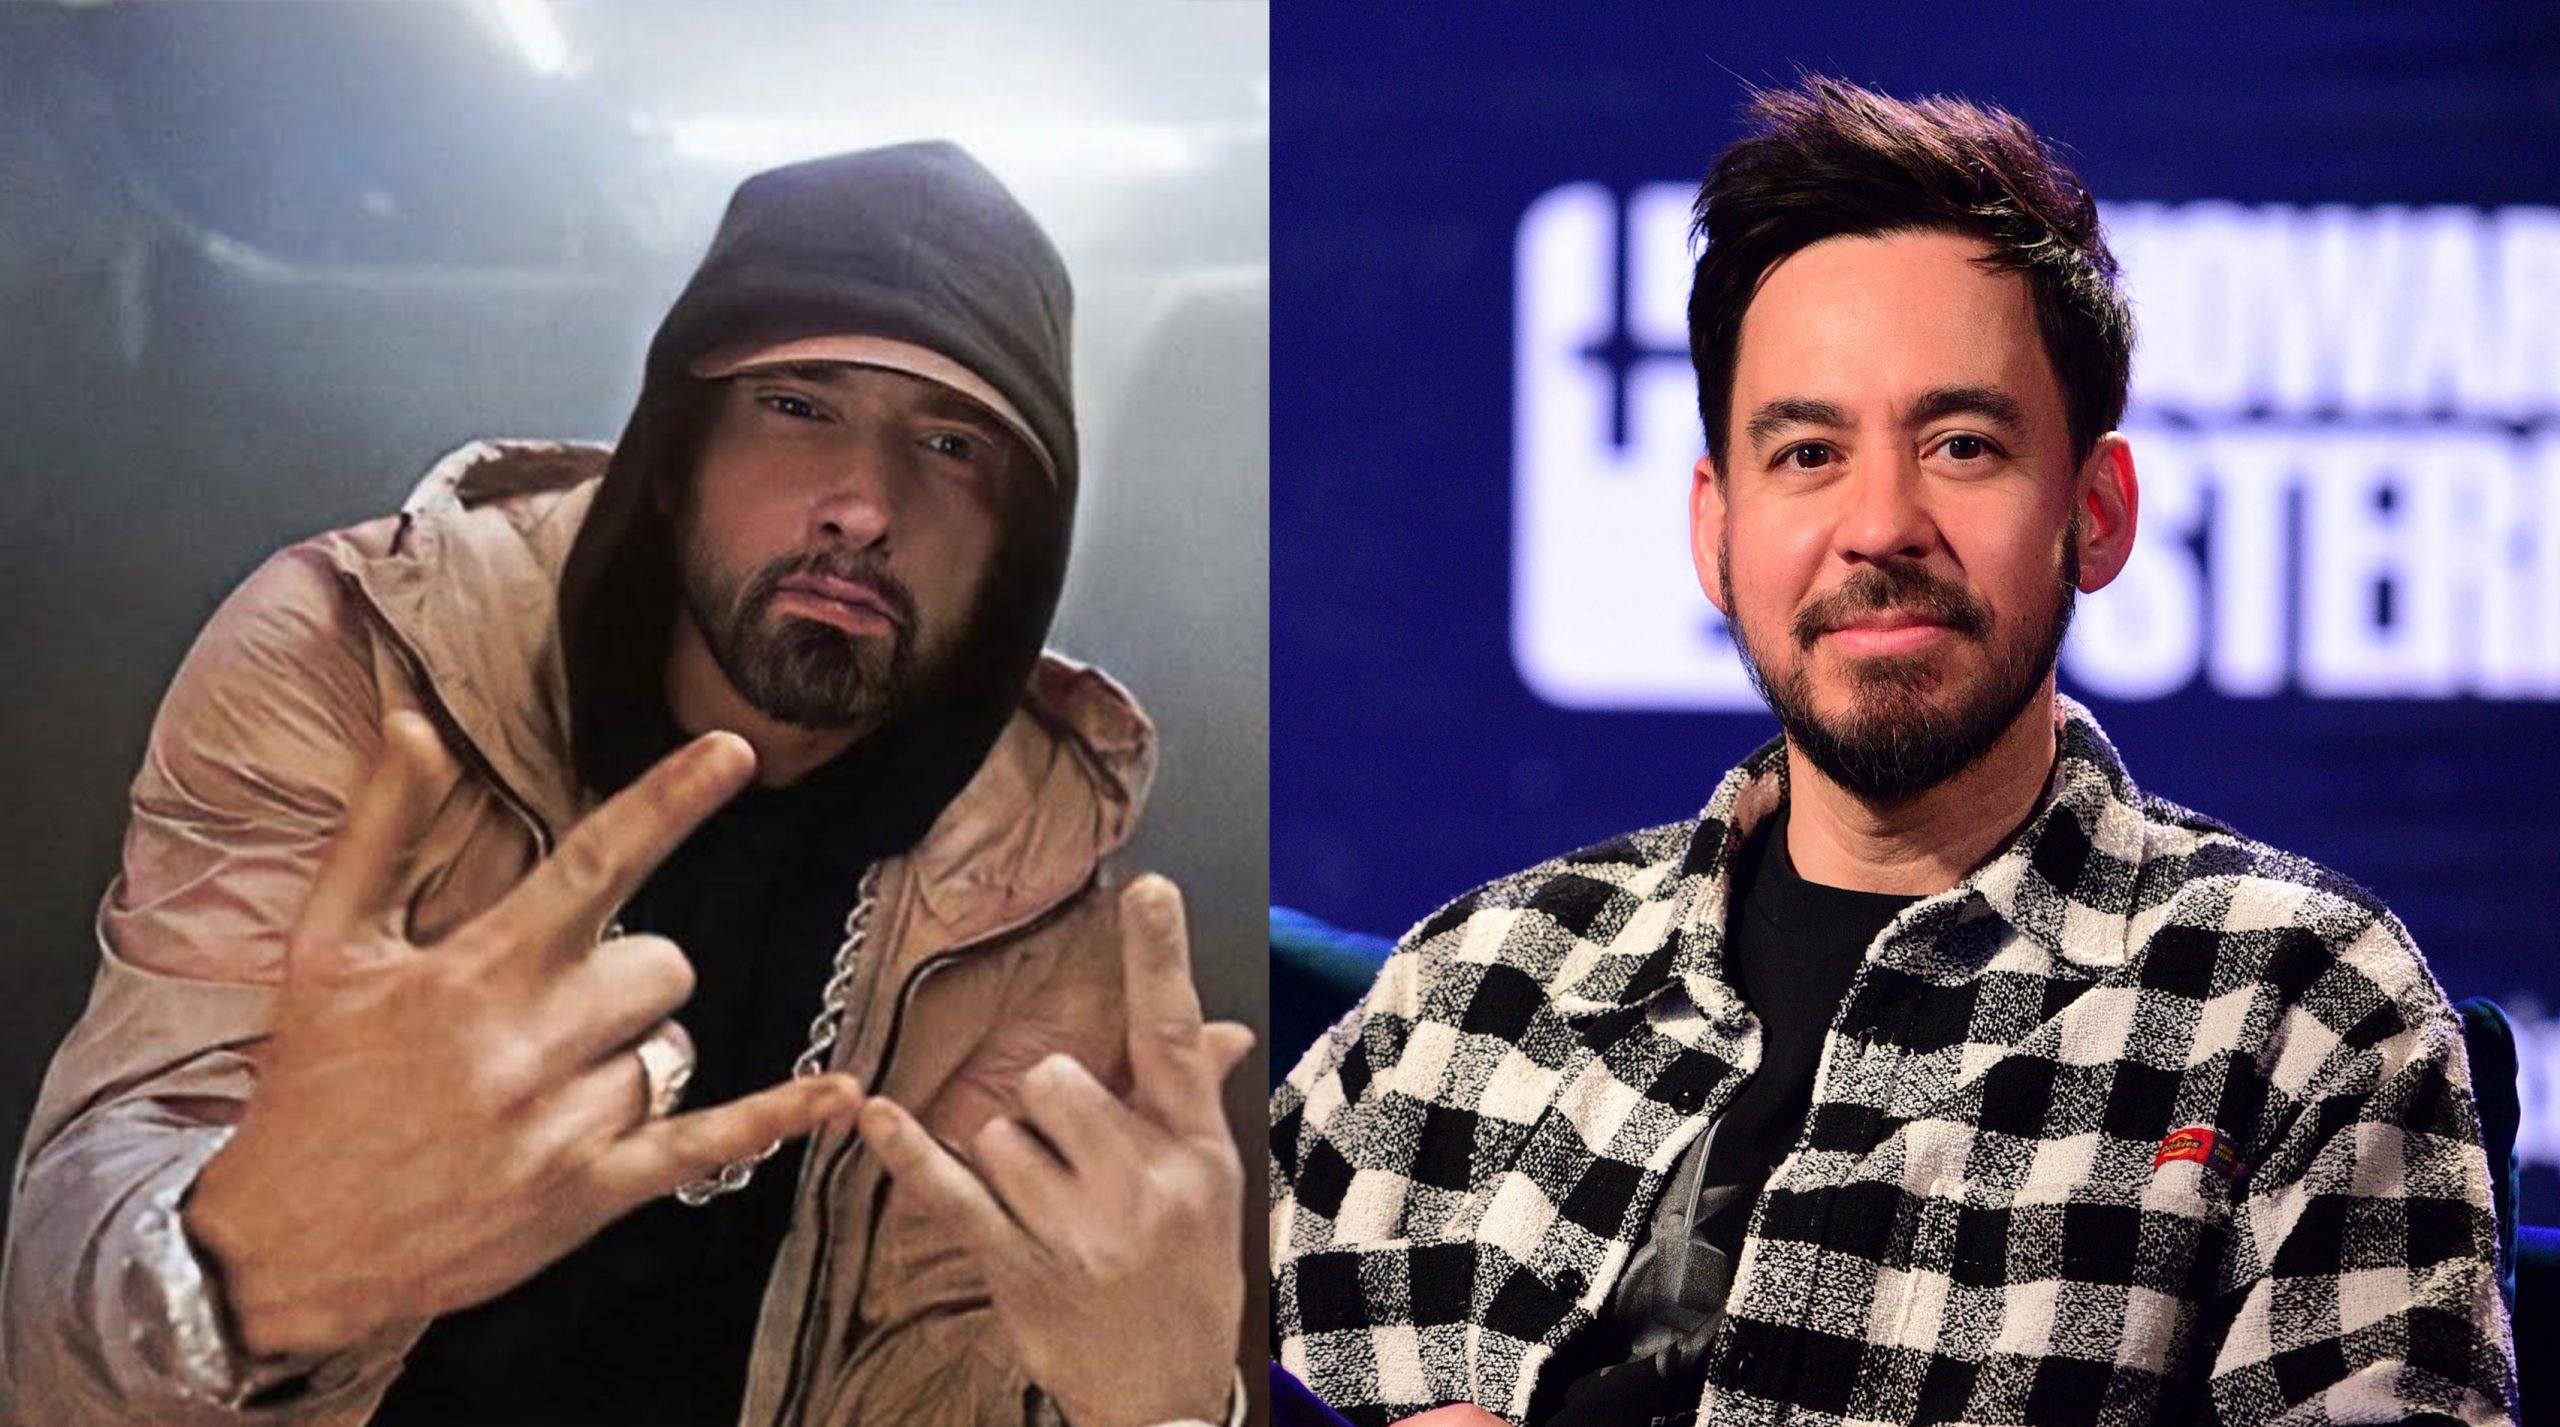 Mike Shinoda of Linkin Park talks battling & collabing with Eminem